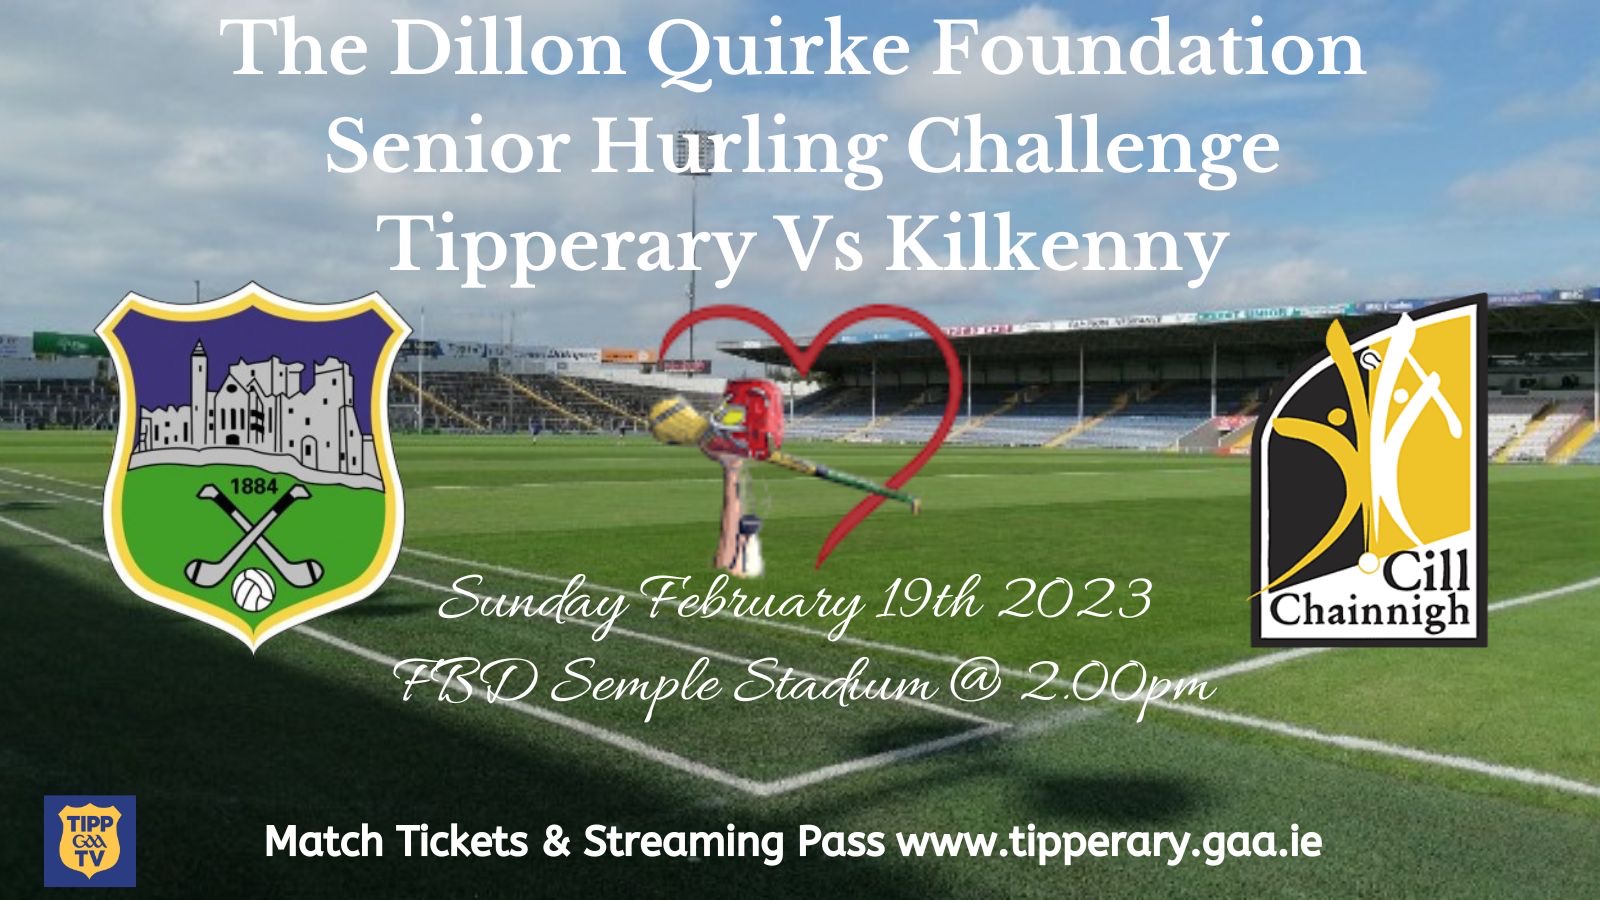 The Dillon Quirke Foundation Senior Hurling Challenge: Tipperary vs. Kilkenny